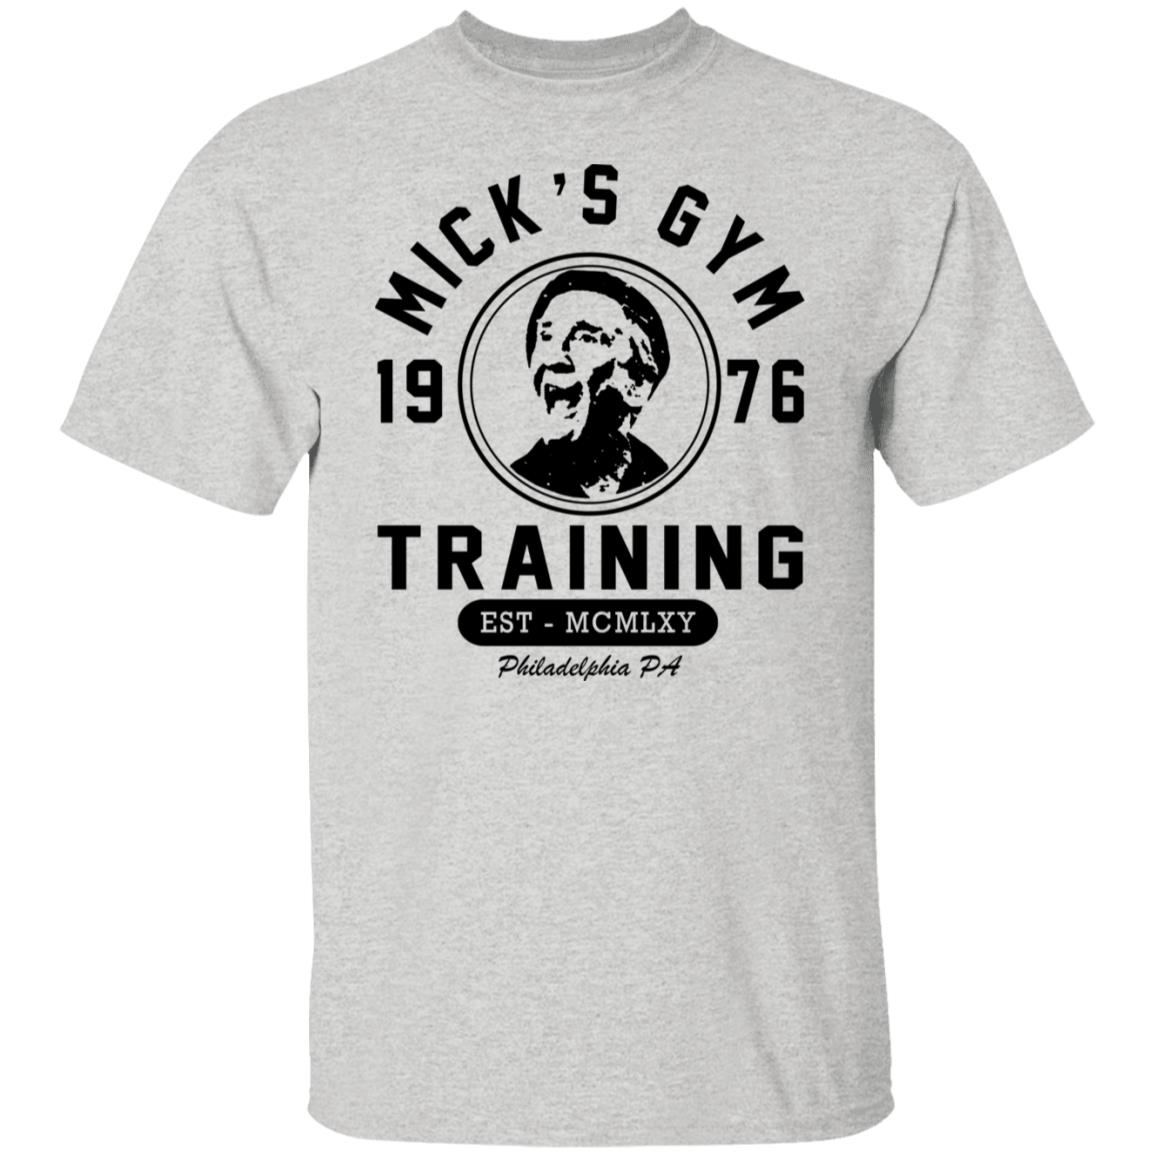 Rocky Mick’s Gym Training 1976 Shirt | Teemoonley.com